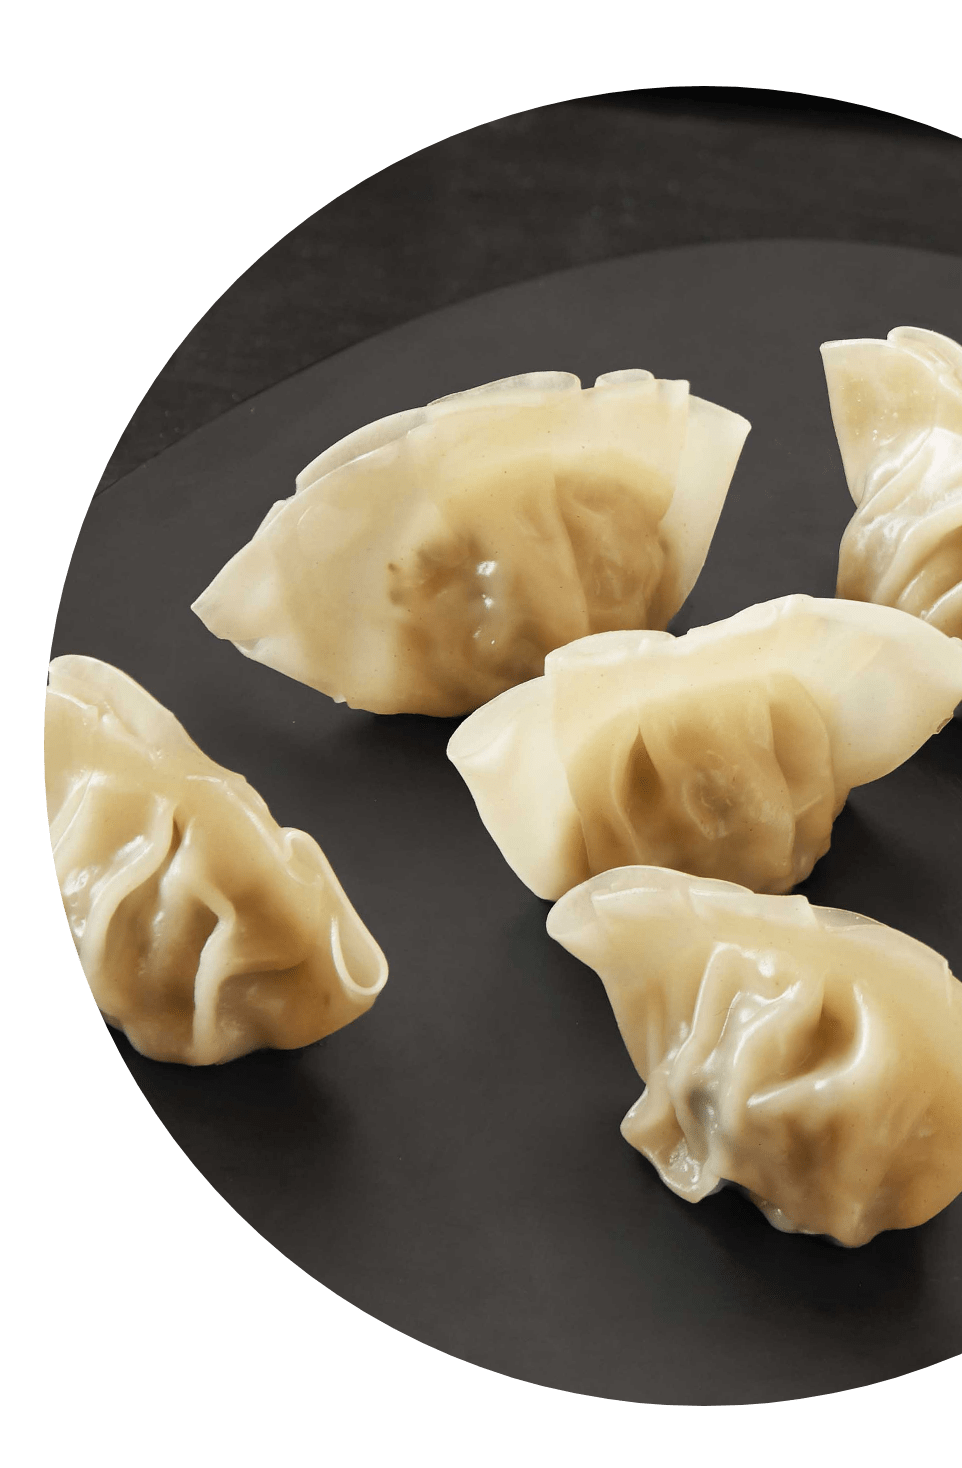 Spotlight on Chef One dumplings